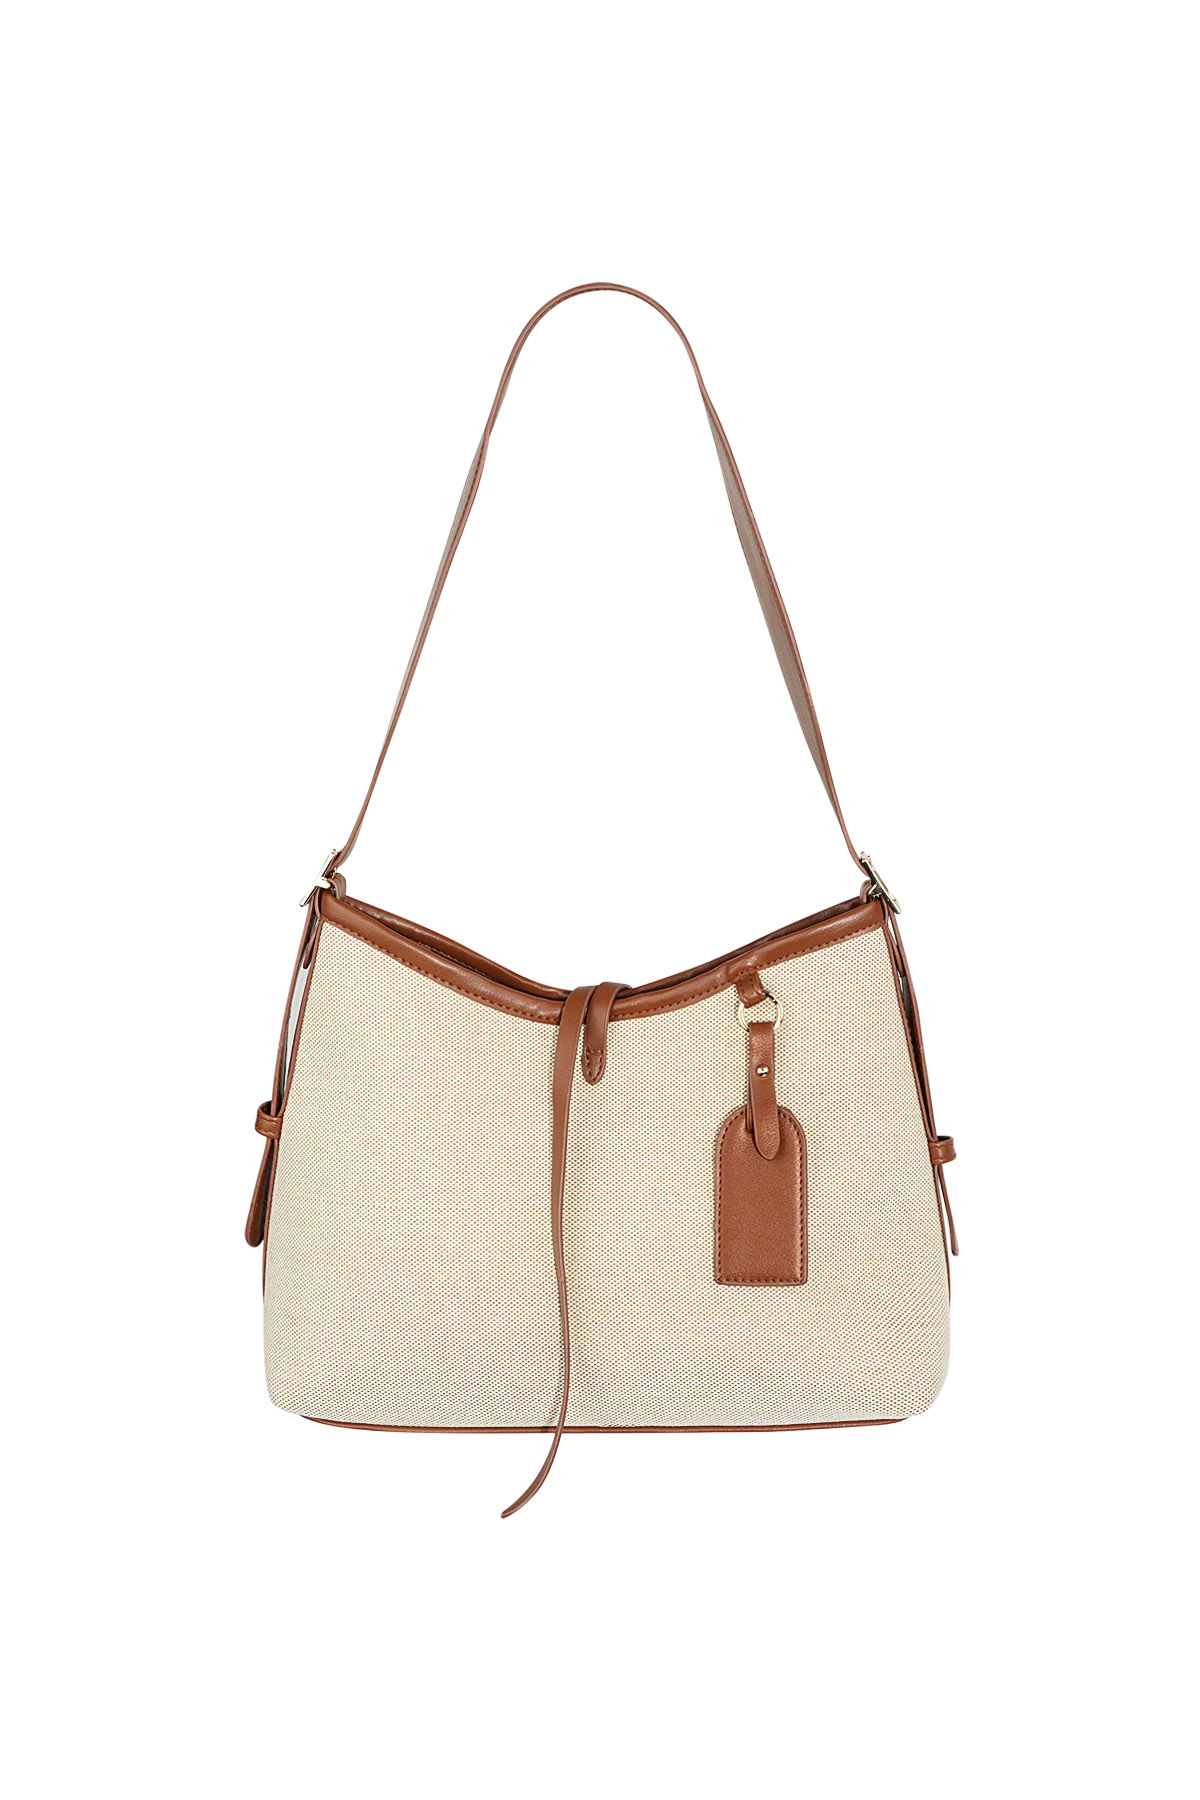 Chic bag with adjustable strap - beige